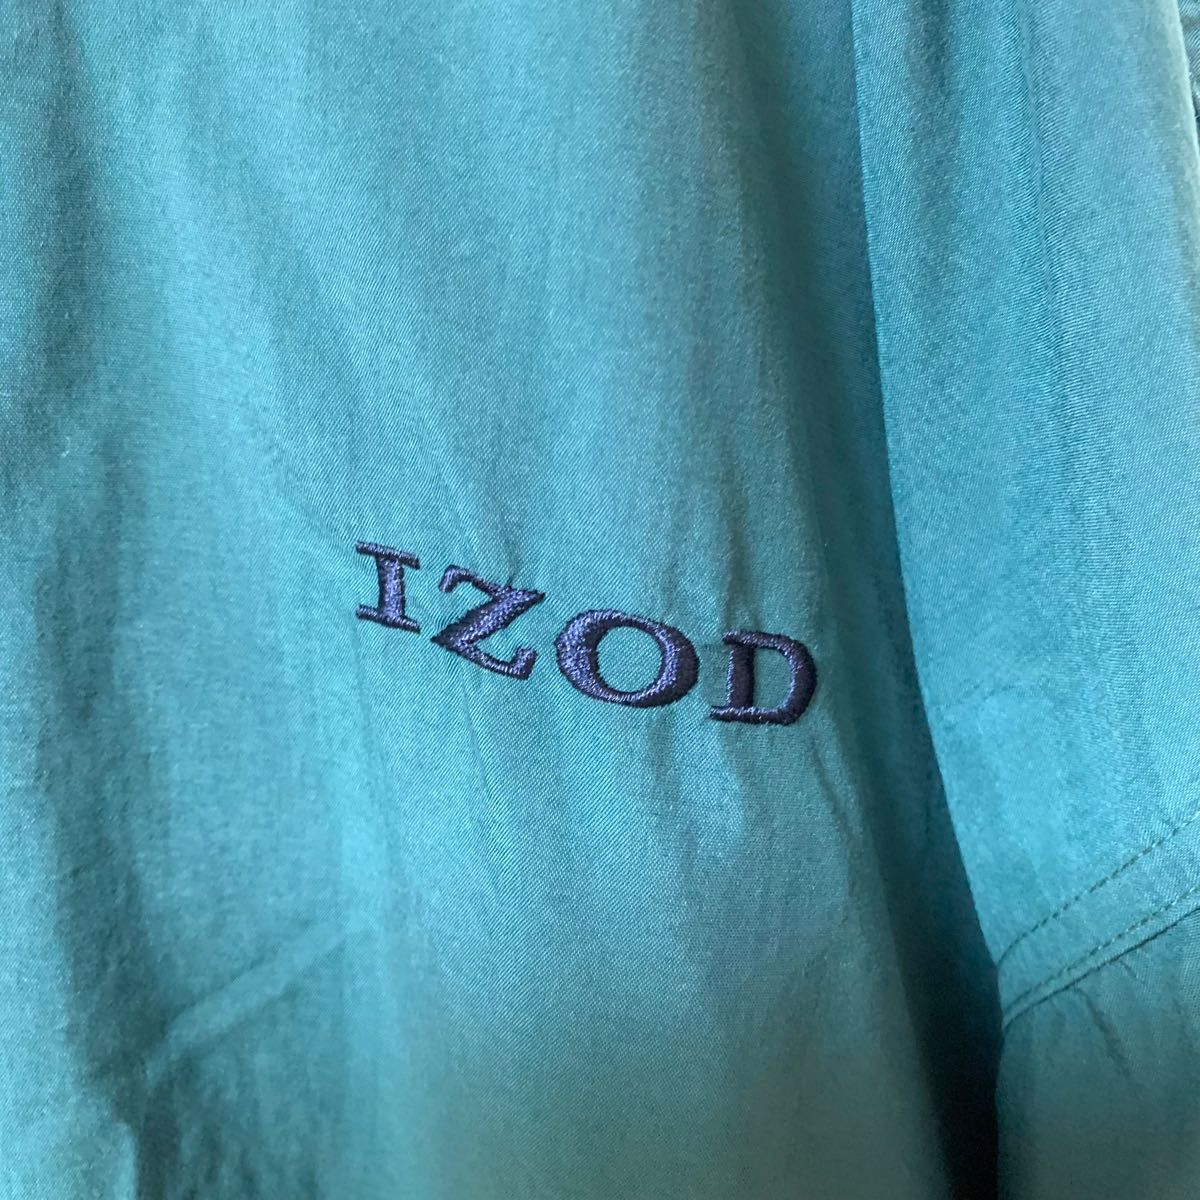 IZOD アイゾッド プルオーバーナイロンジャケット 刺繍ロゴ 古着 90s モスグリーン ヴィンテージ